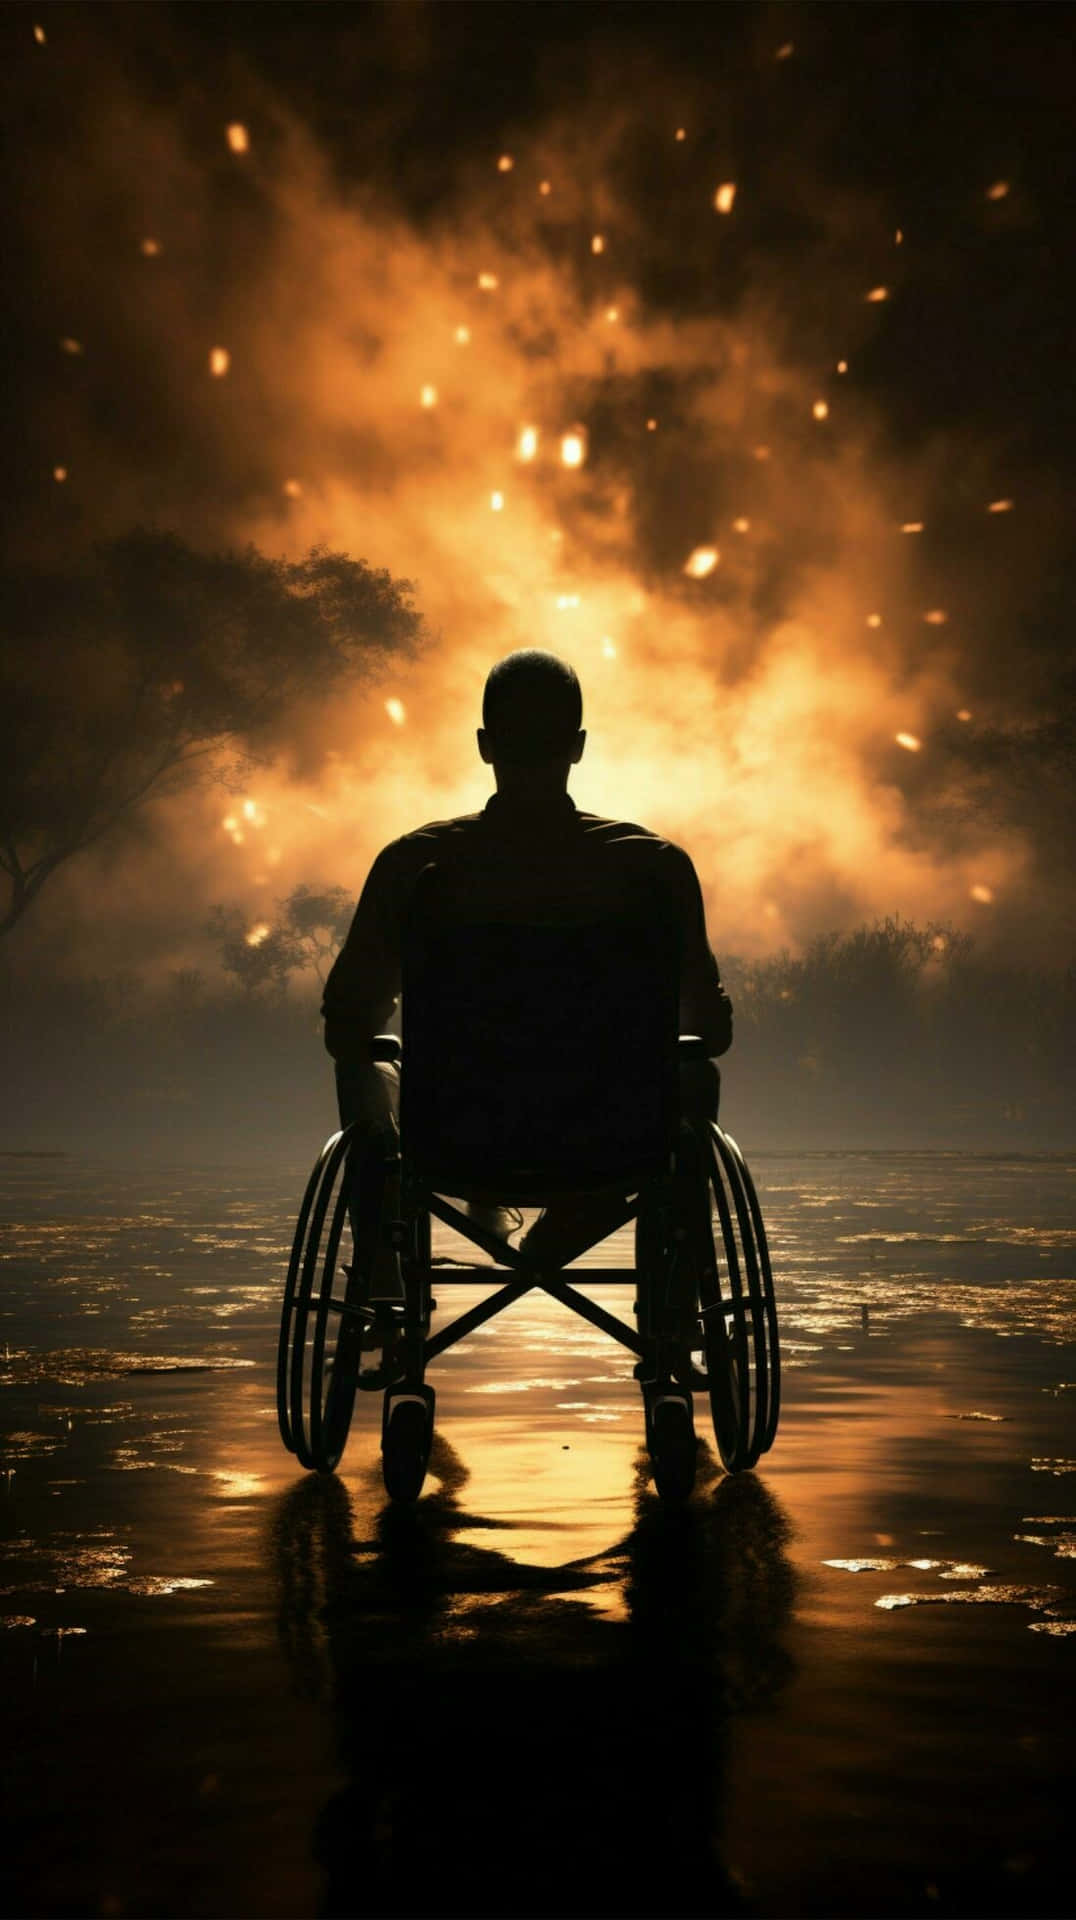 Wheelchair Silhouette Against Sunset Wallpaper